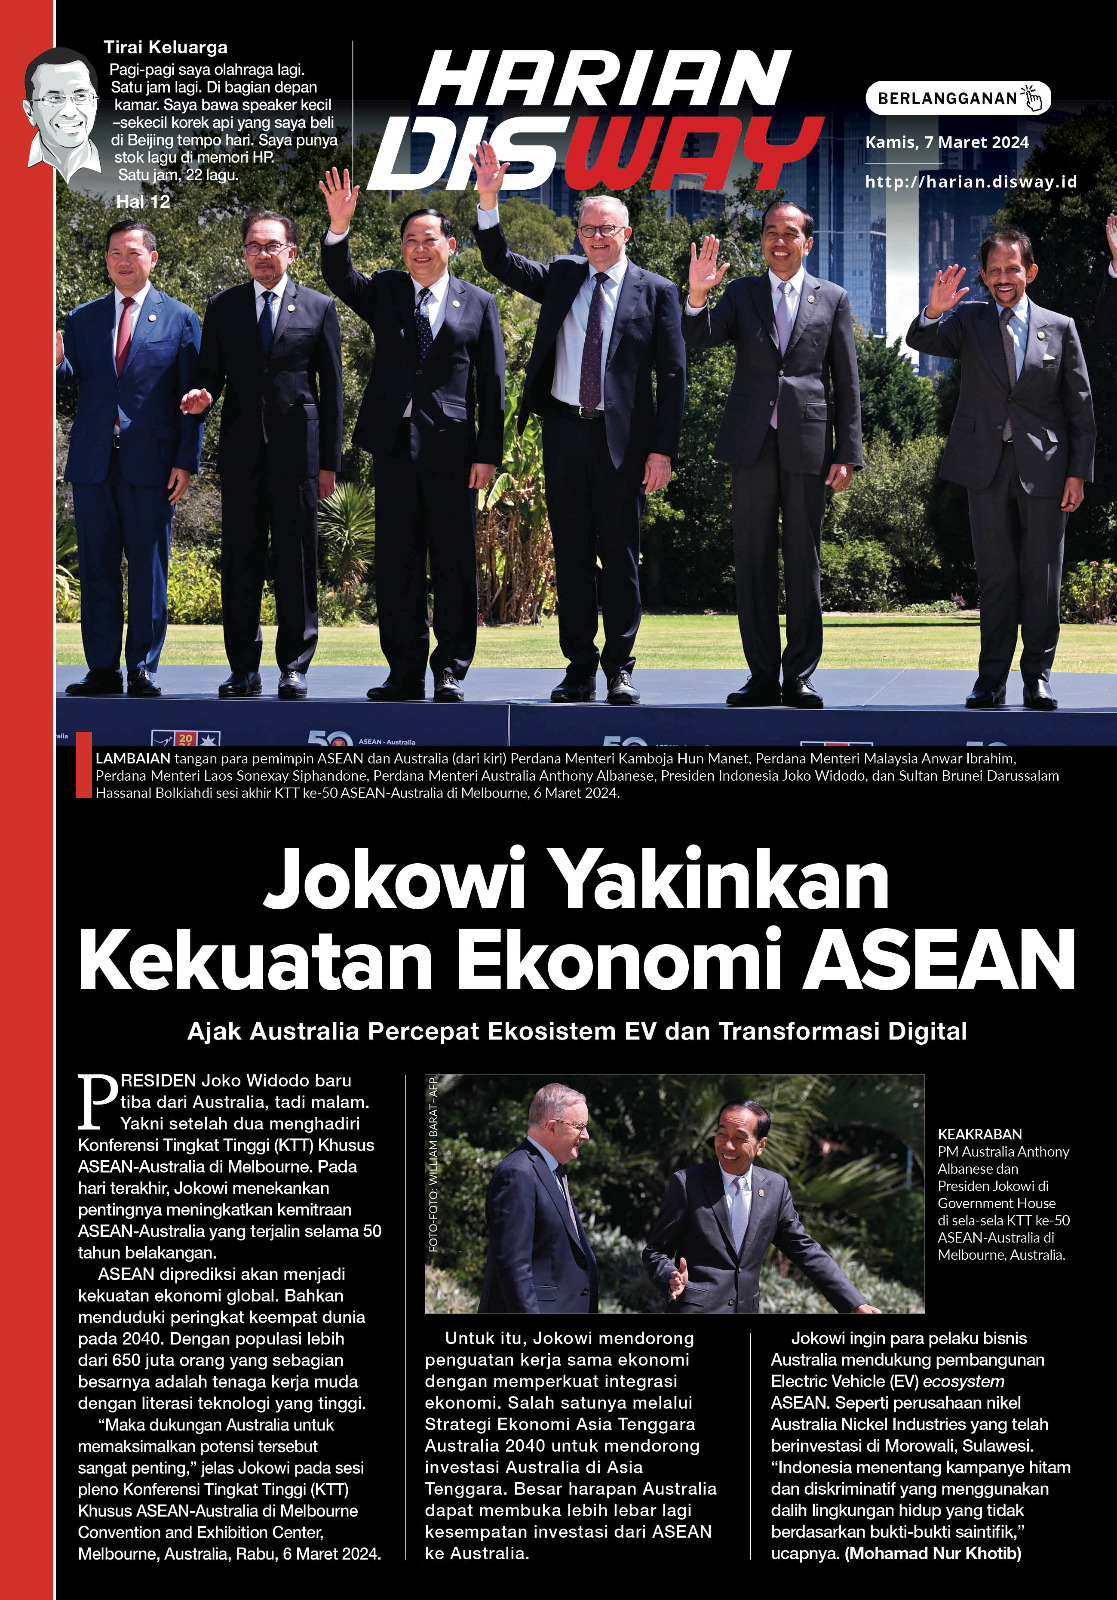 Jokowi Yakinkan Kekuatan Ekonomi ASEAN